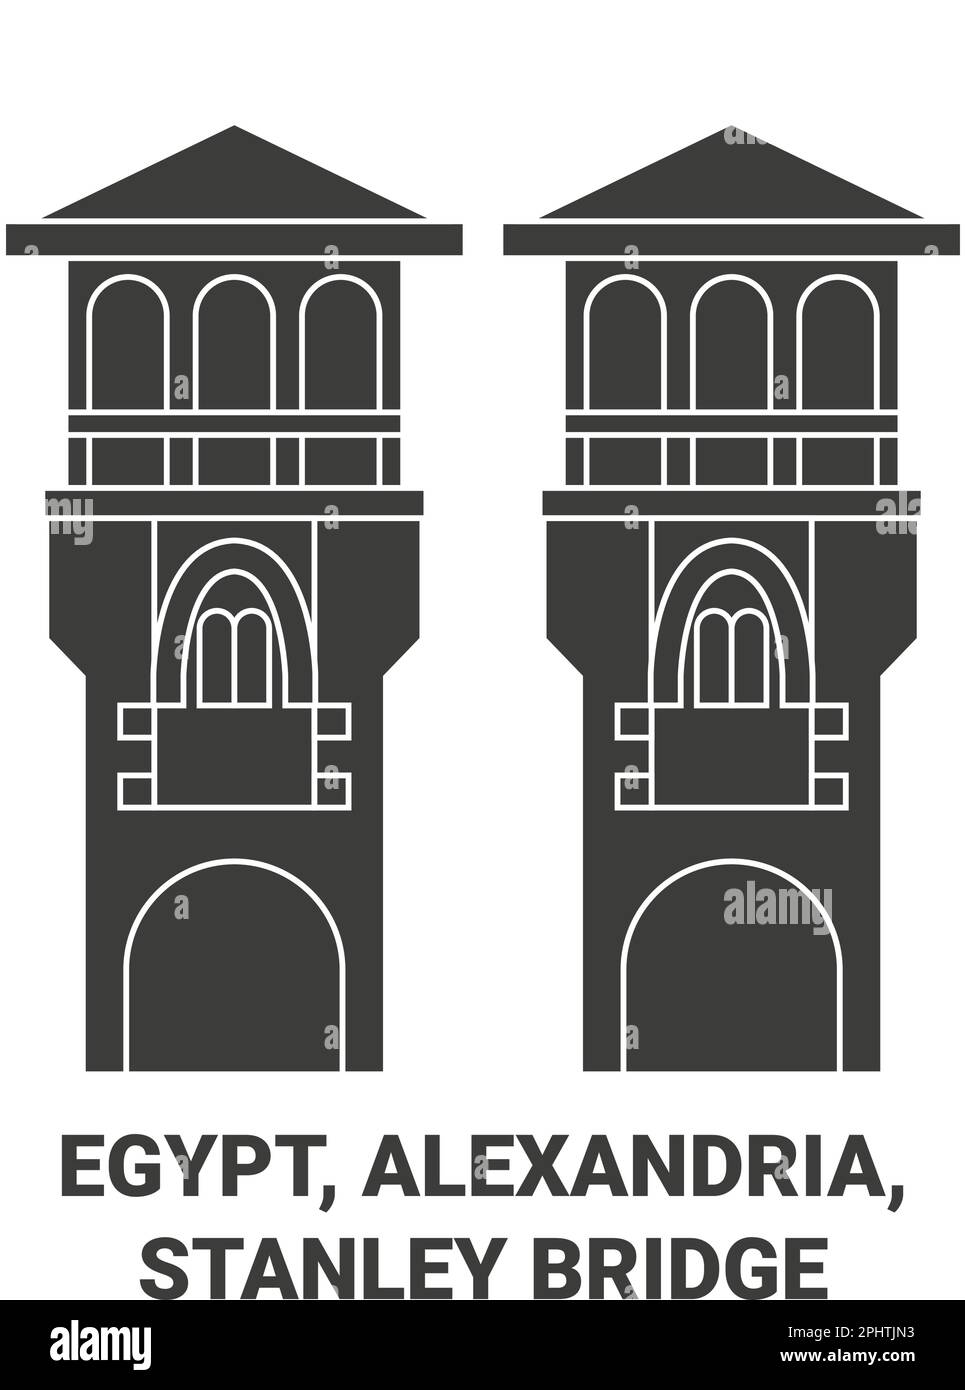 Egypt, Alexandria, Stanley Bridge travel landmark vector illustration Stock Vector